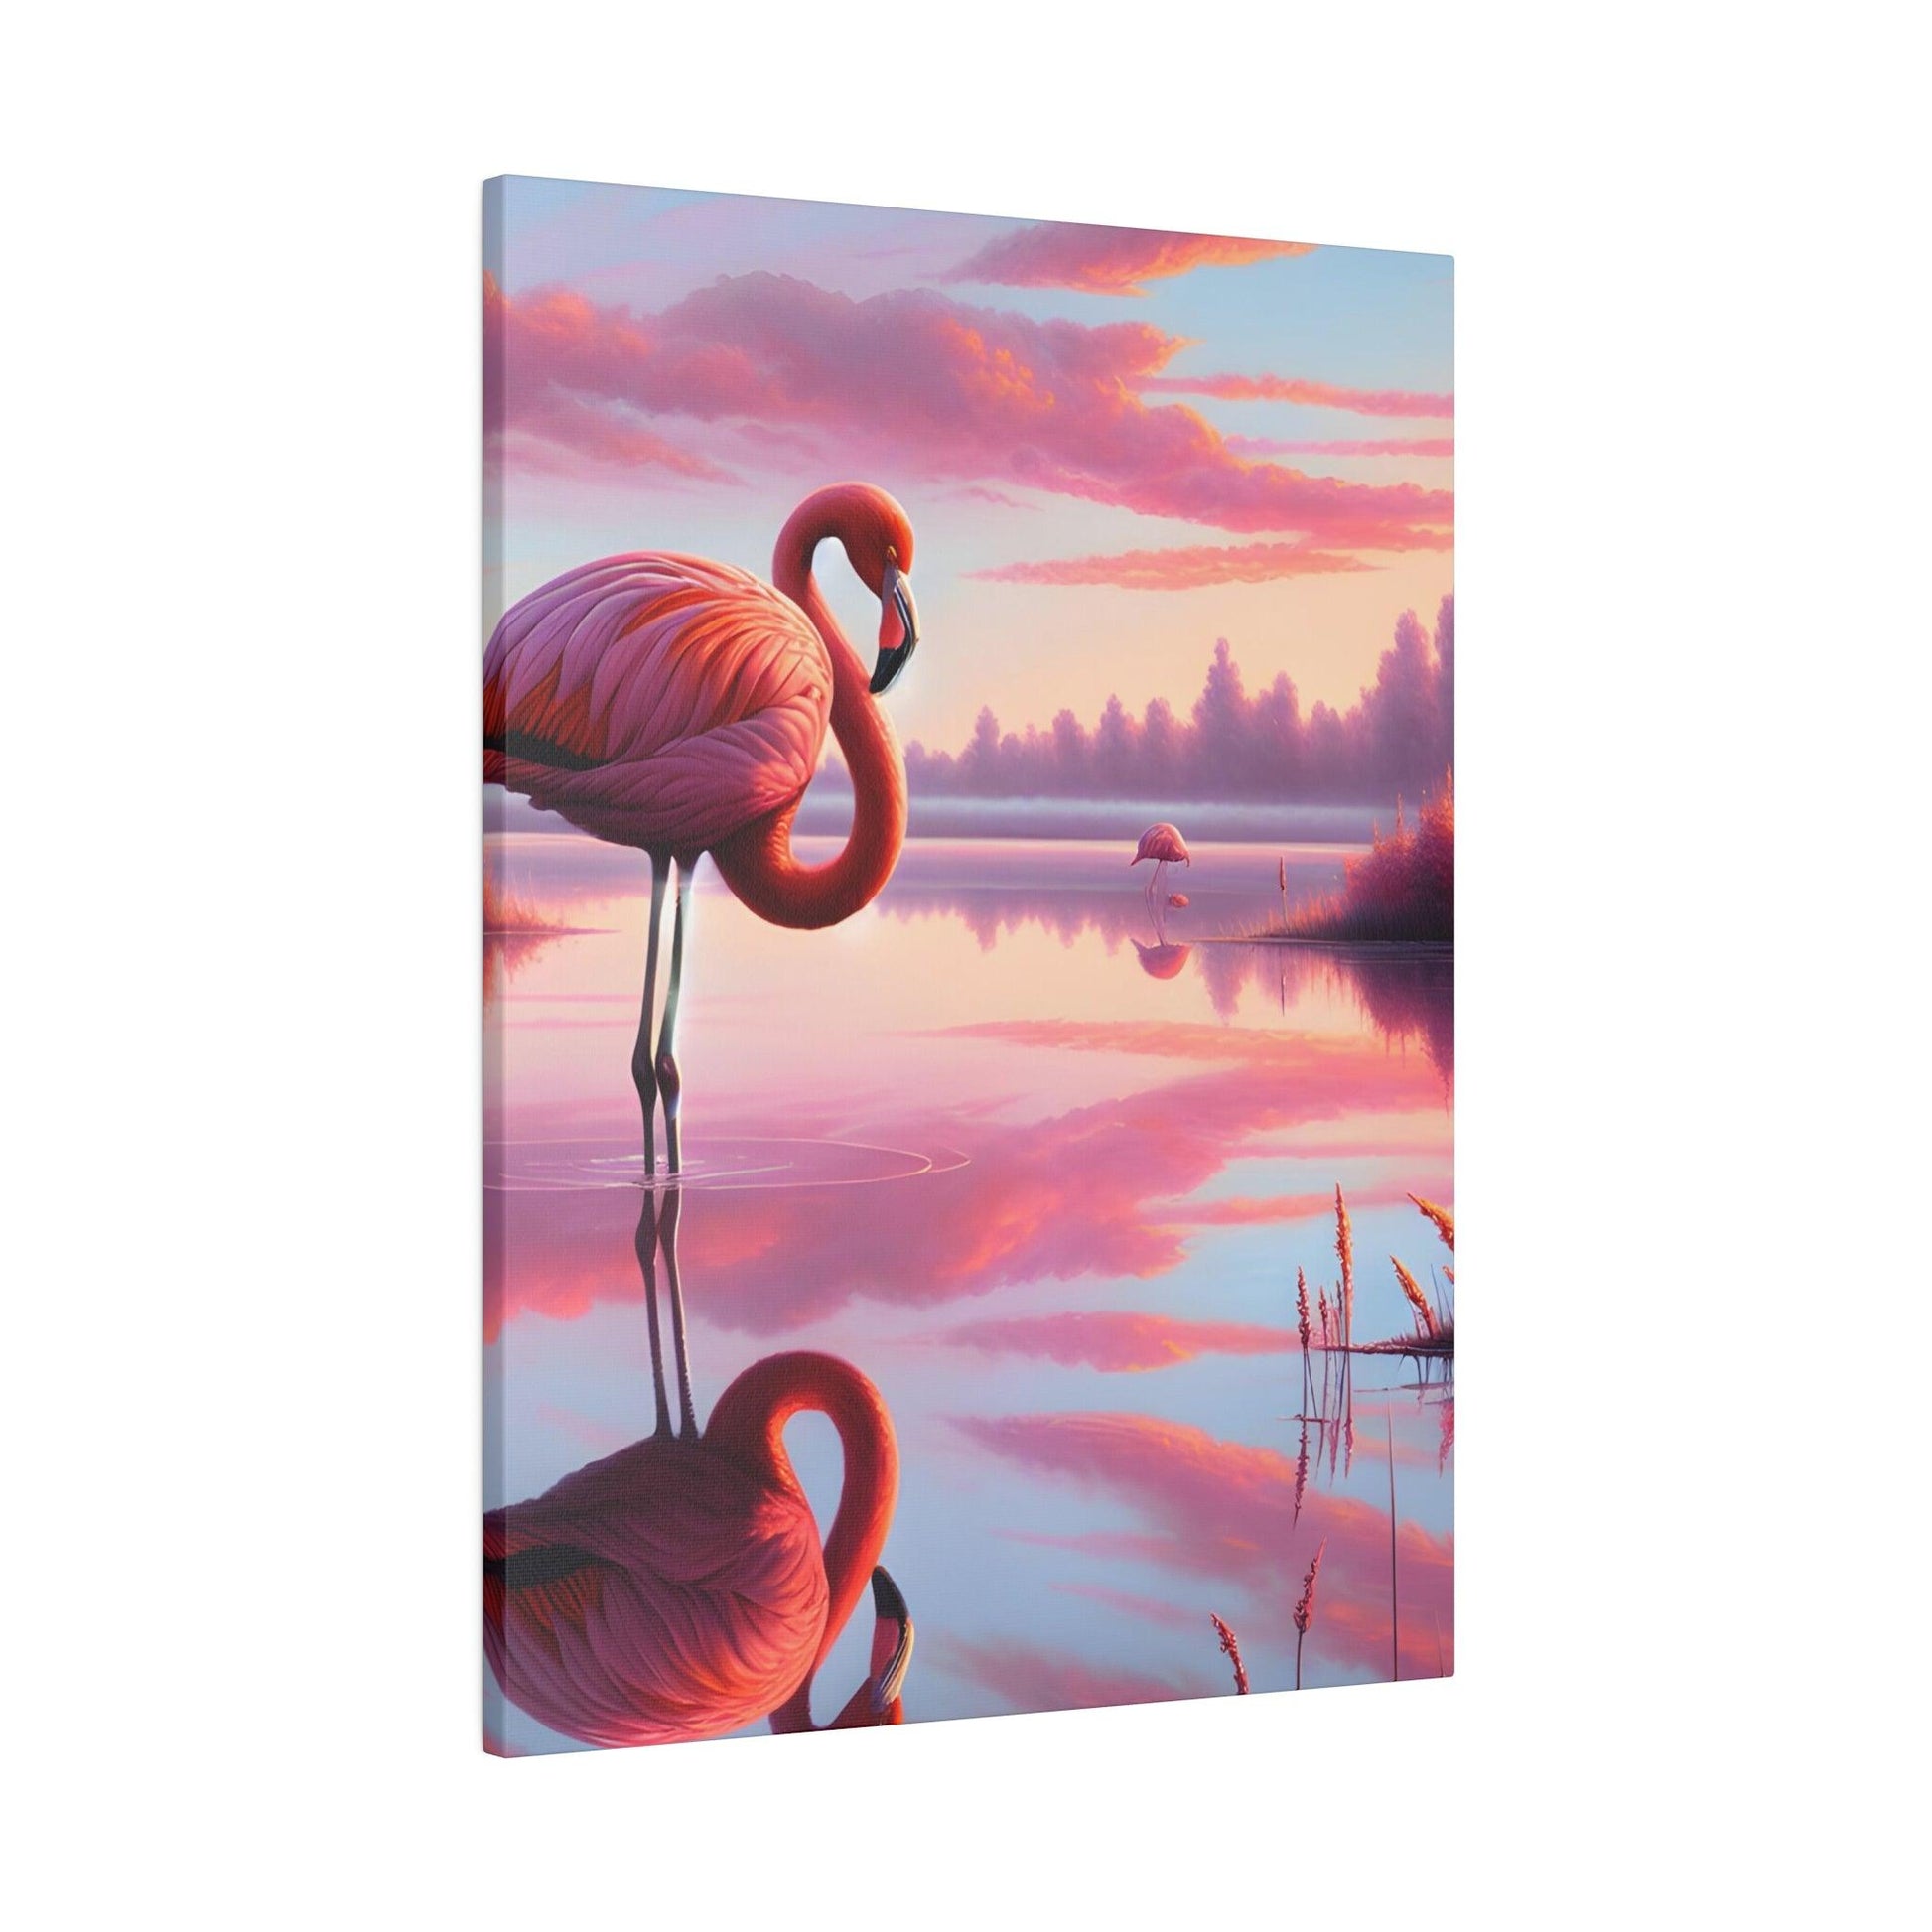 "Flamingo Fantasy: Radiant Canvas Wall Art" - The Alice Gallery